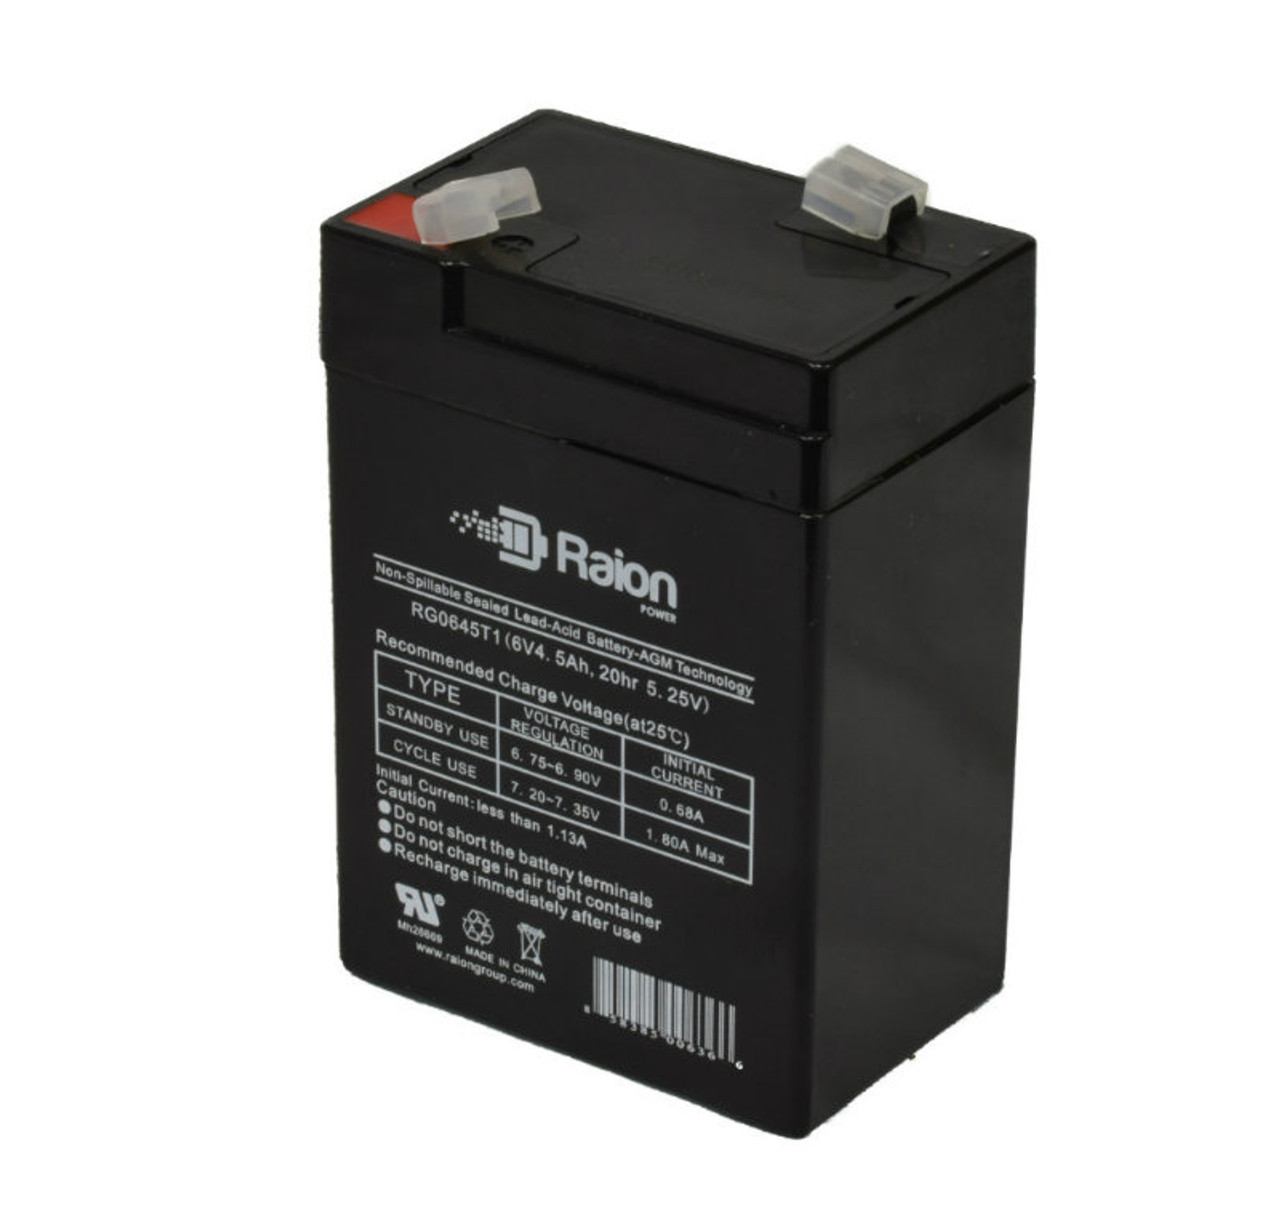 Raion Power RG0645T1 6V 4.5Ah Replacement Battery Cartridge for Alexander G64016